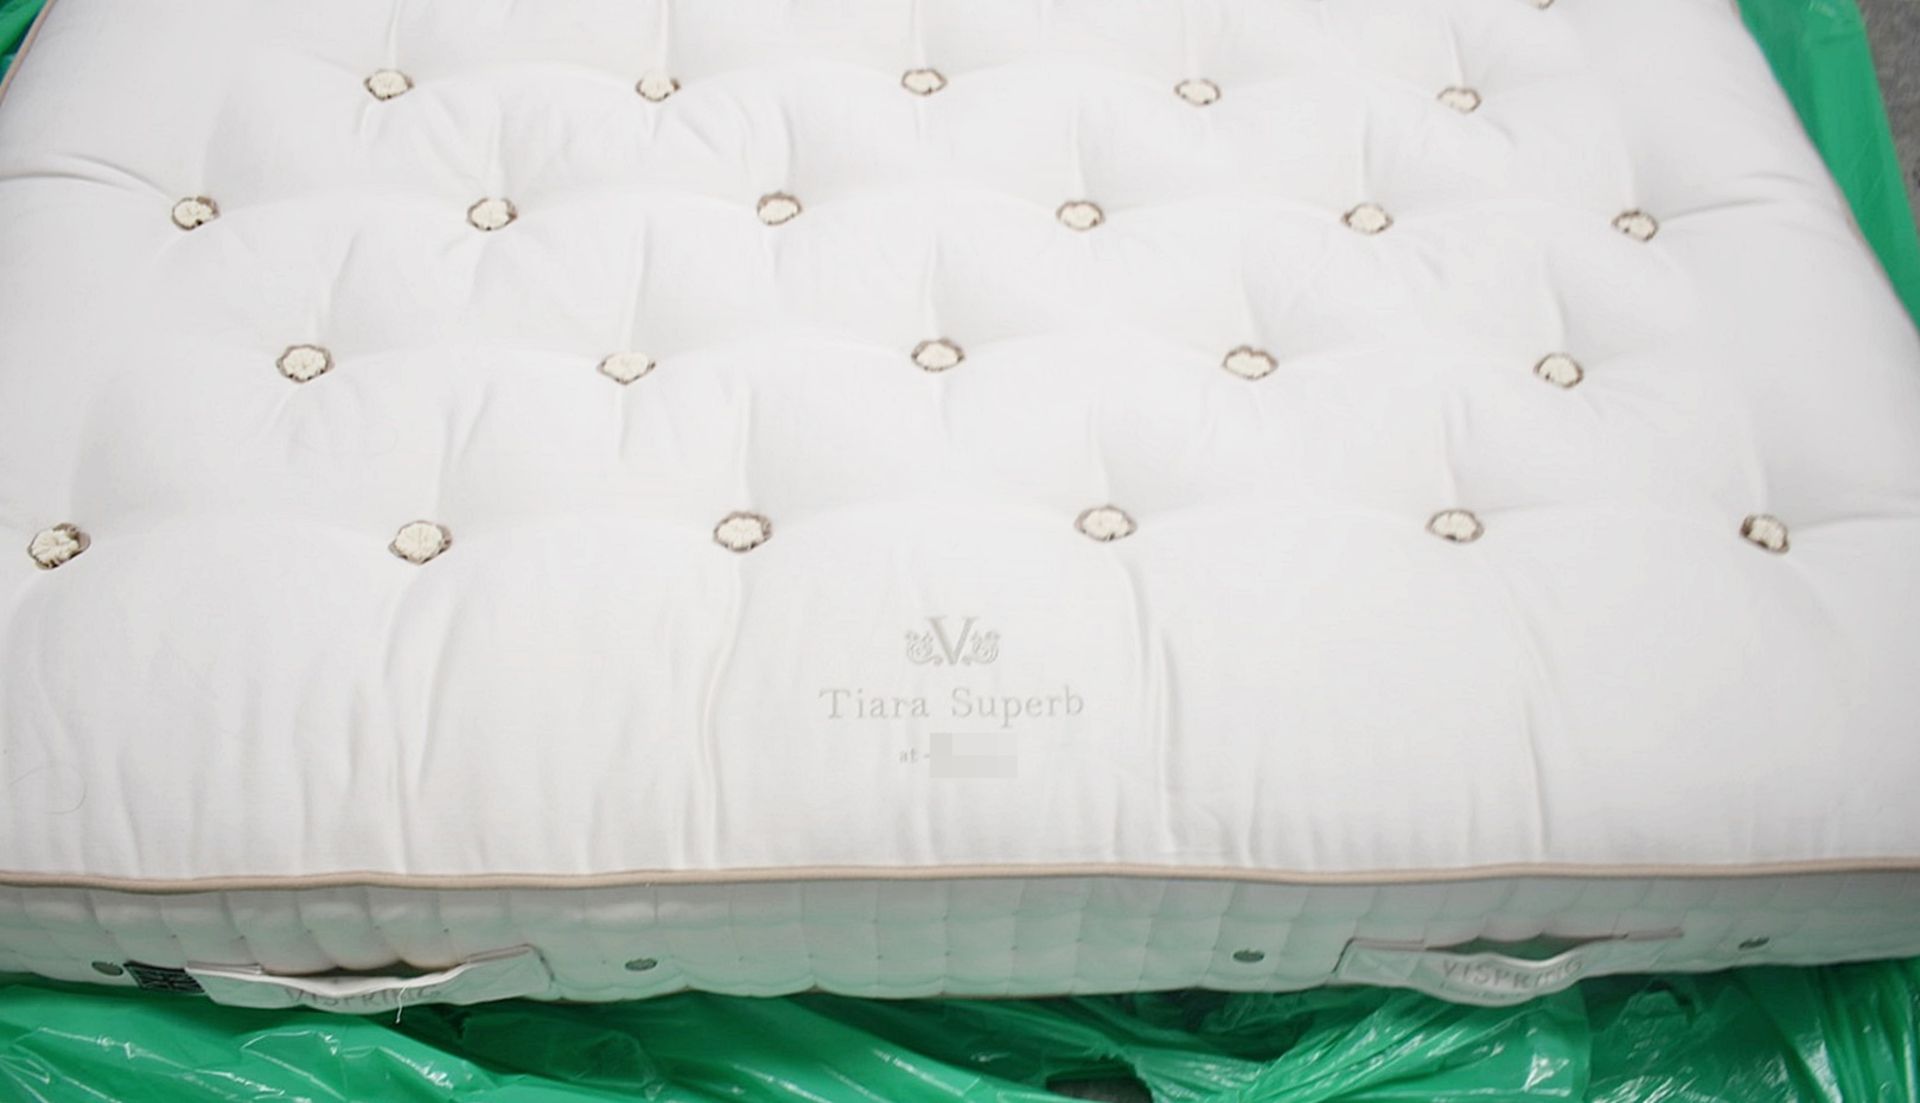 1 x VISPRING 'Tiara Superb' Luxury Handmade Super Kingsize Mattress, 180x200cm - Original RRP £7,895 - Image 8 of 8